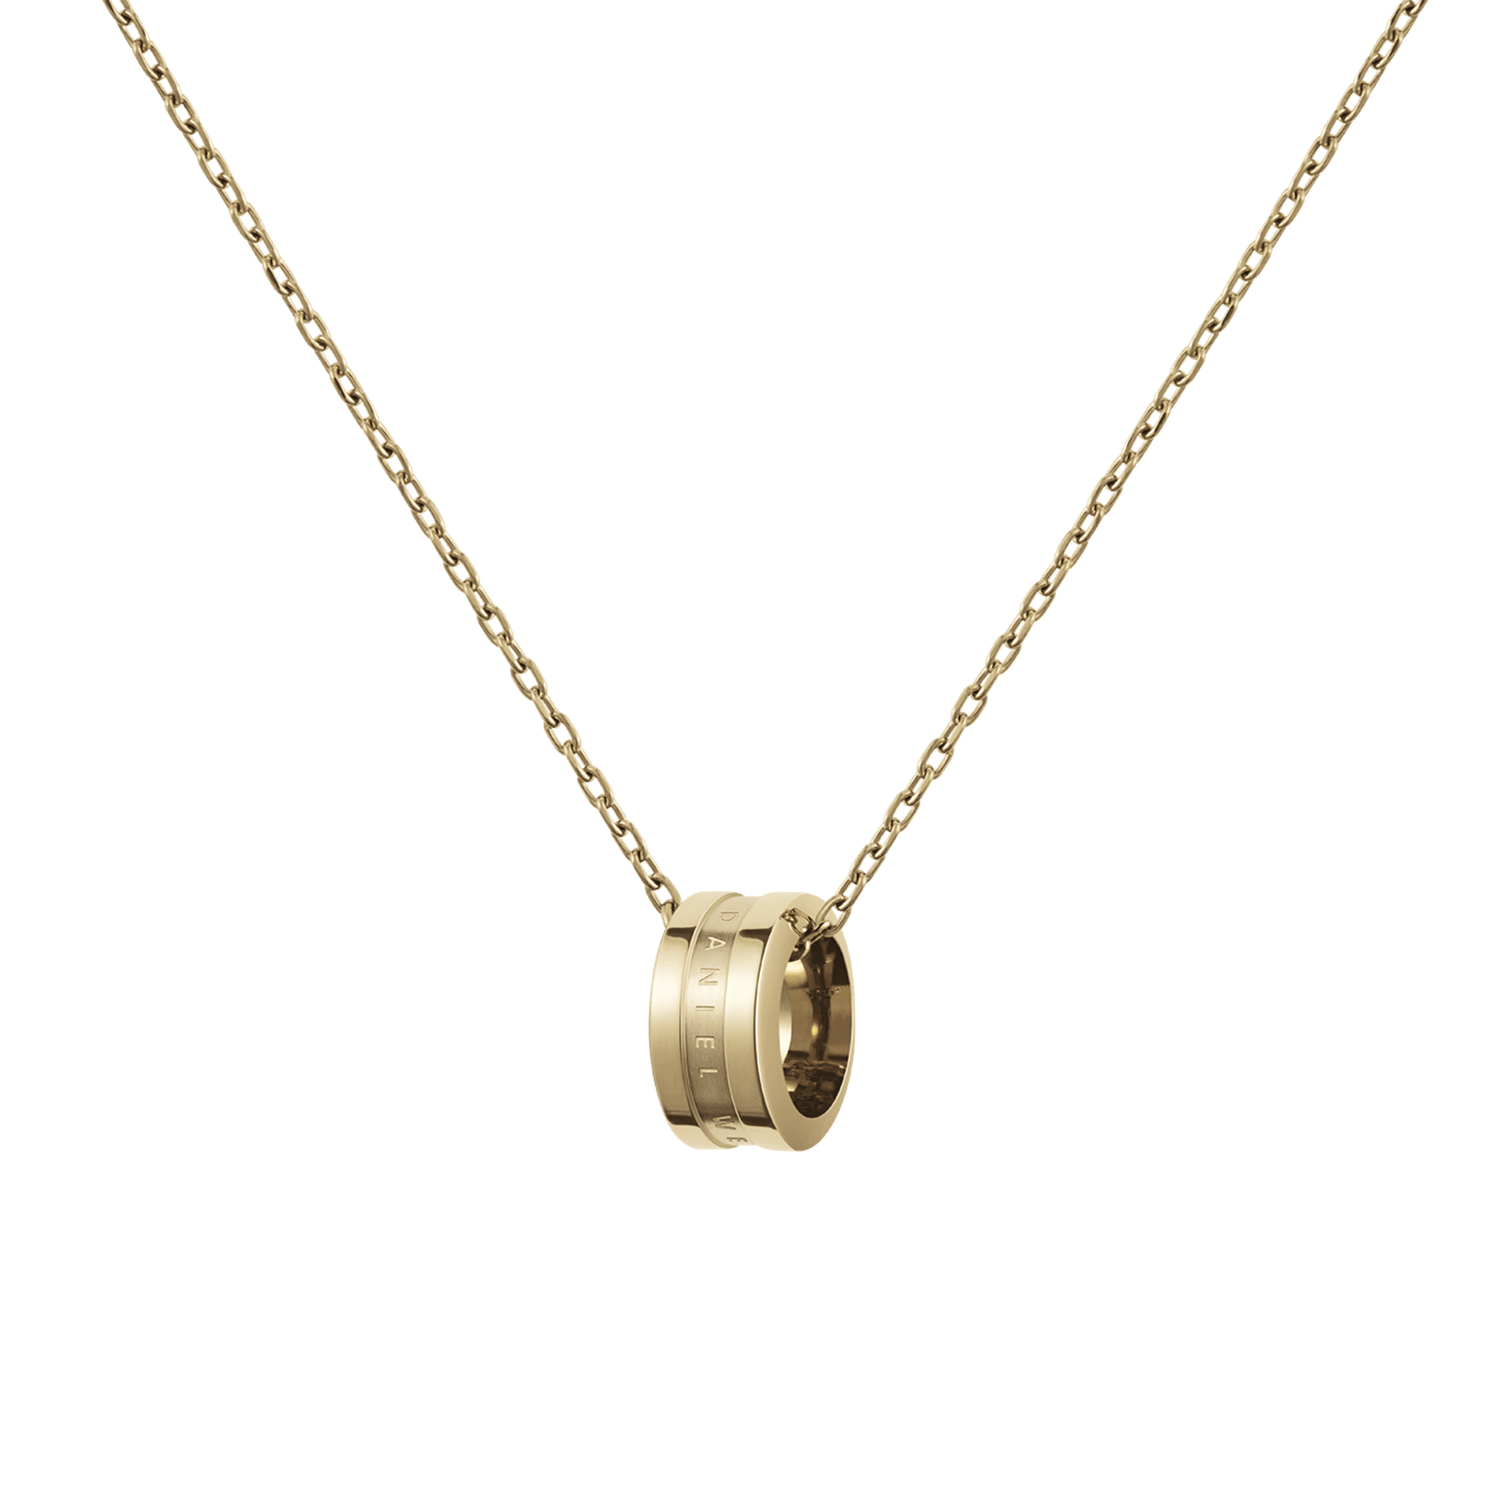 Elan Lumine - Women's Silver pendant necklace | DW